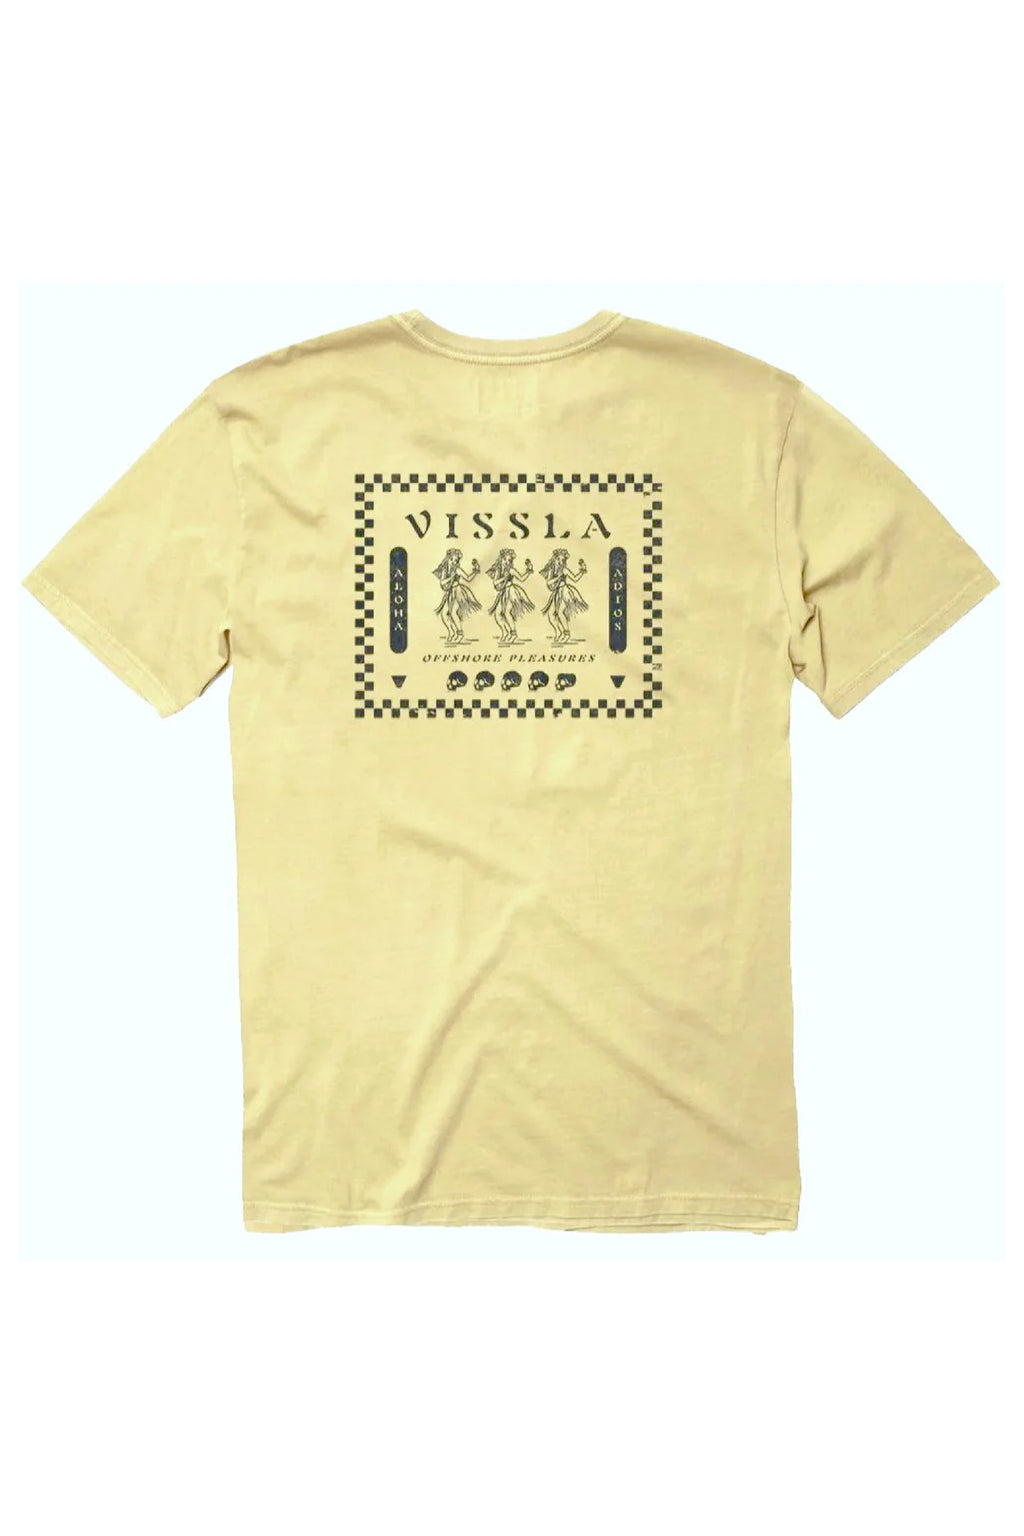 Vissla - Hula Hips Organic Pocket T-Shirt